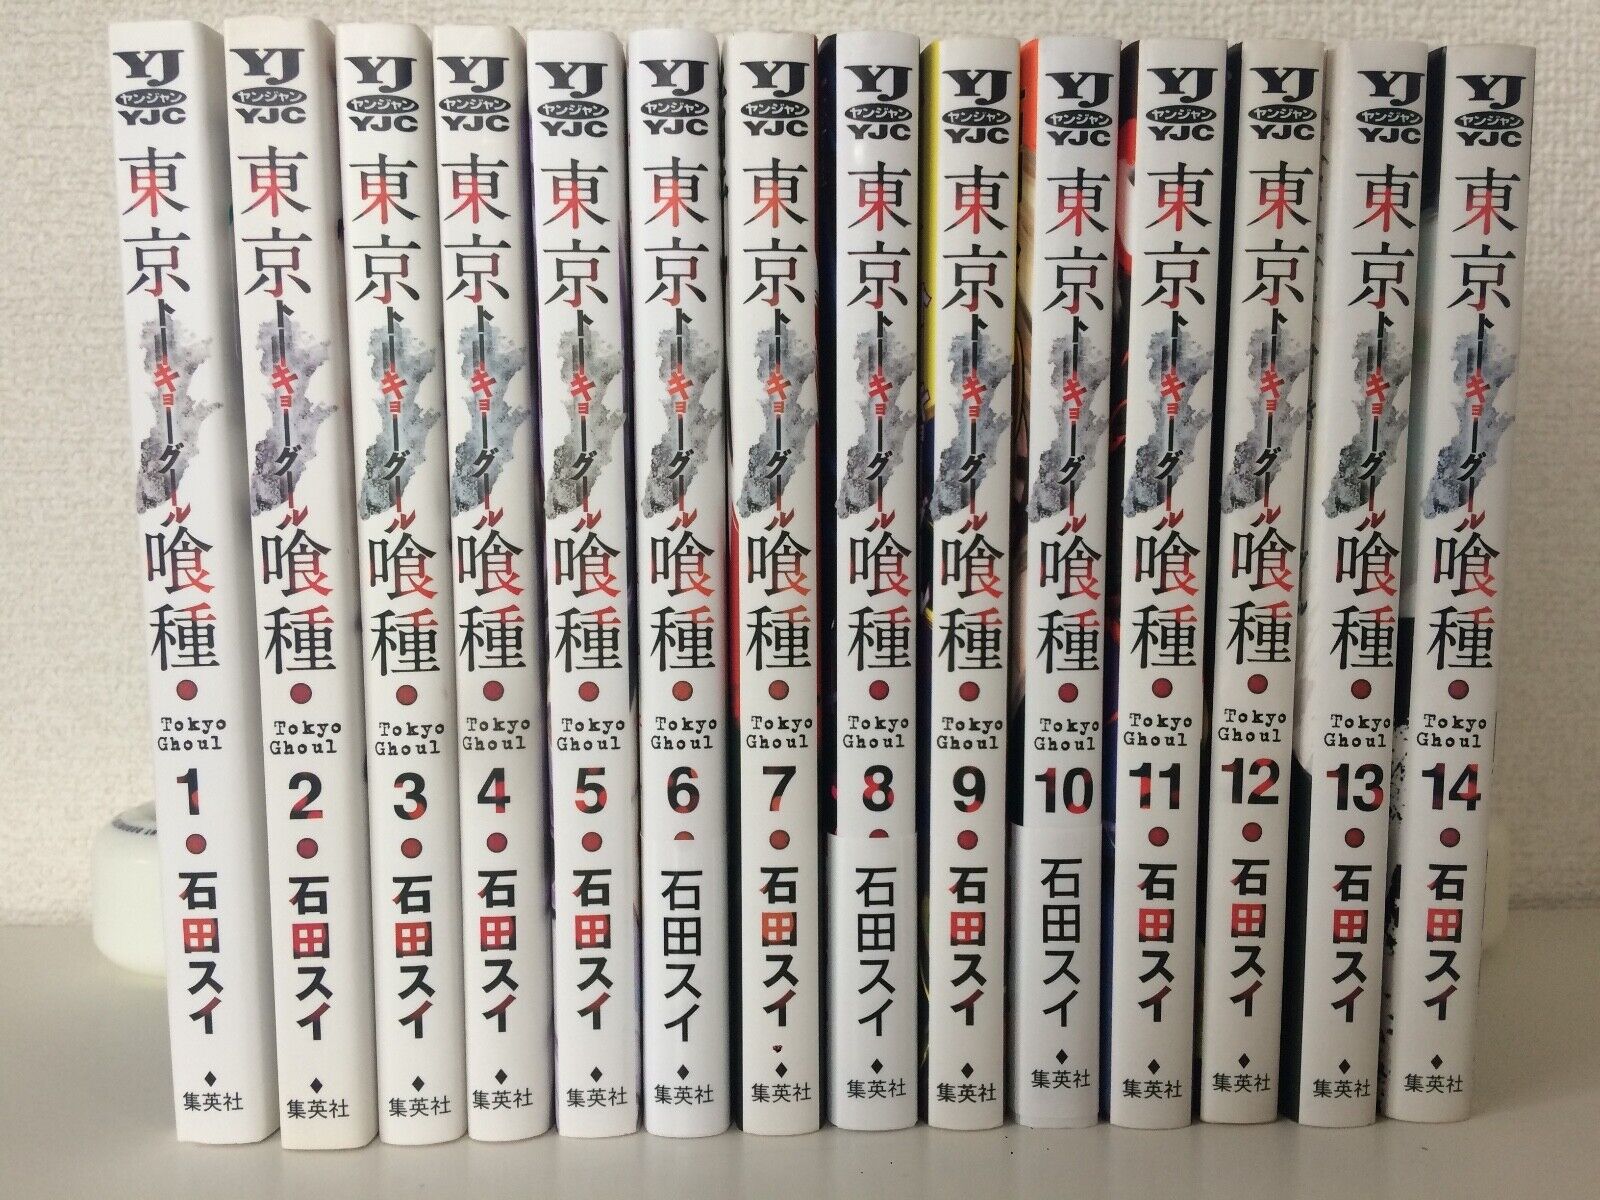 Tokyo Ghoul JAPANESE Manga COMPLETE SET volumes 1-14